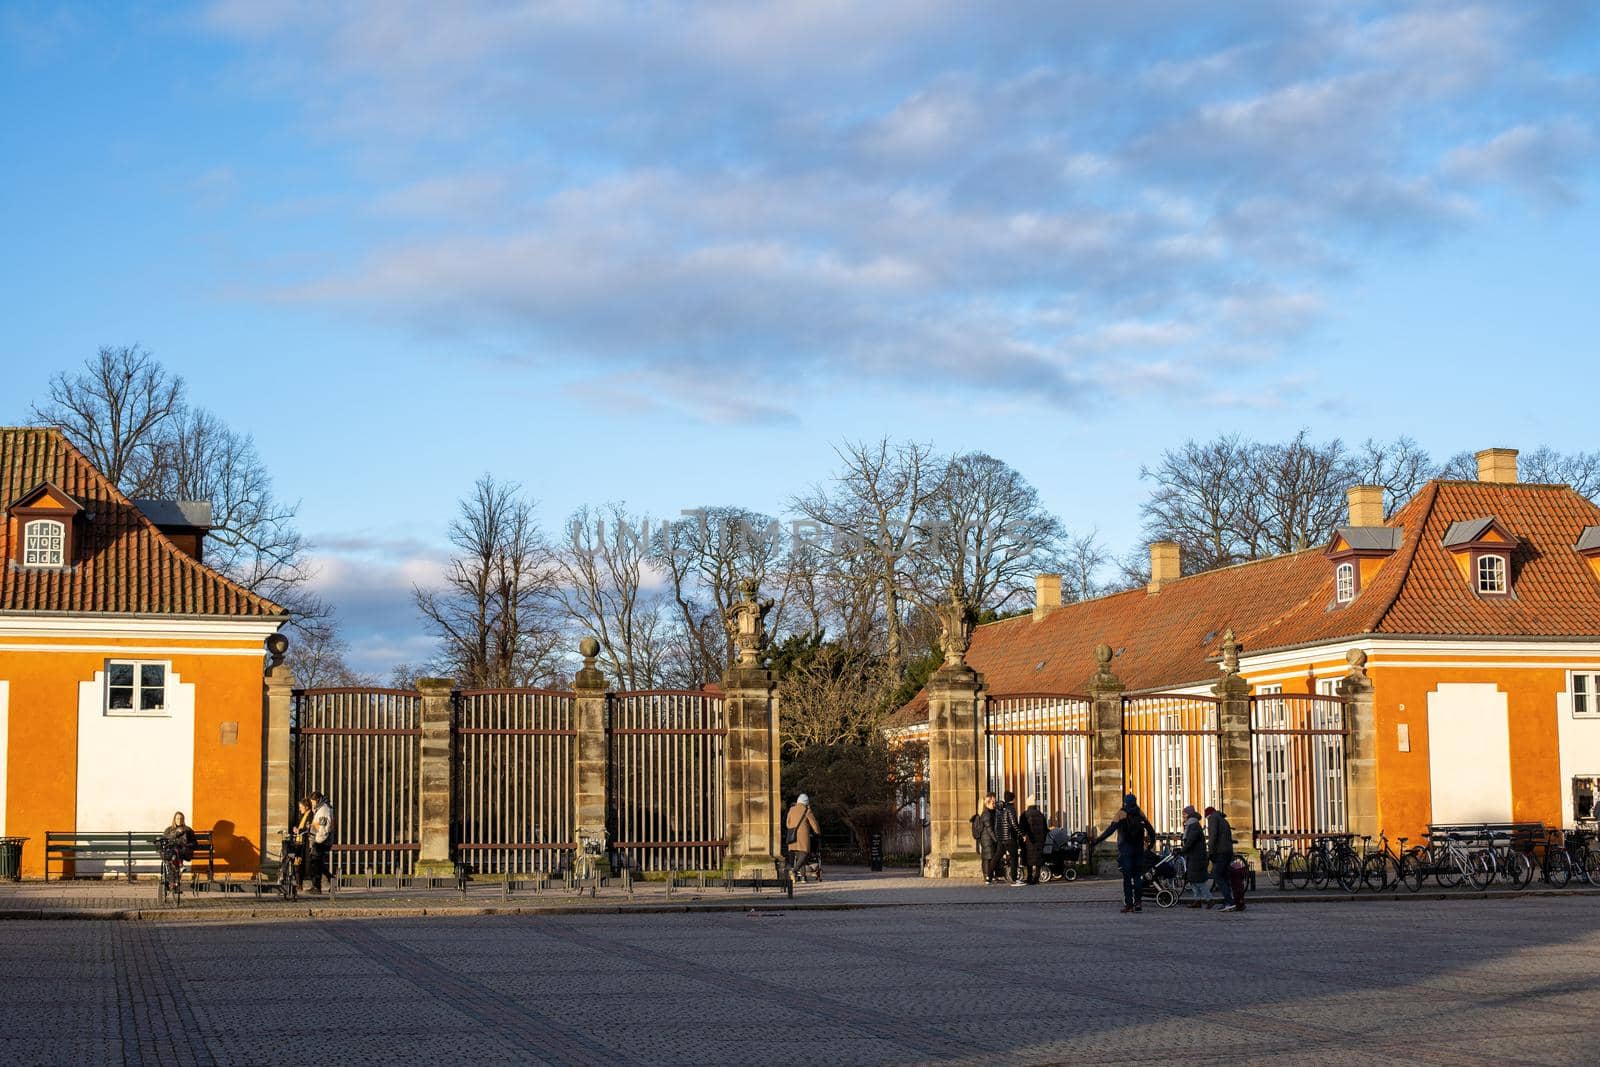 Copenhagen, Denmark - January 03, 2021: People at the main entrance to Frederiksberg Gardens.